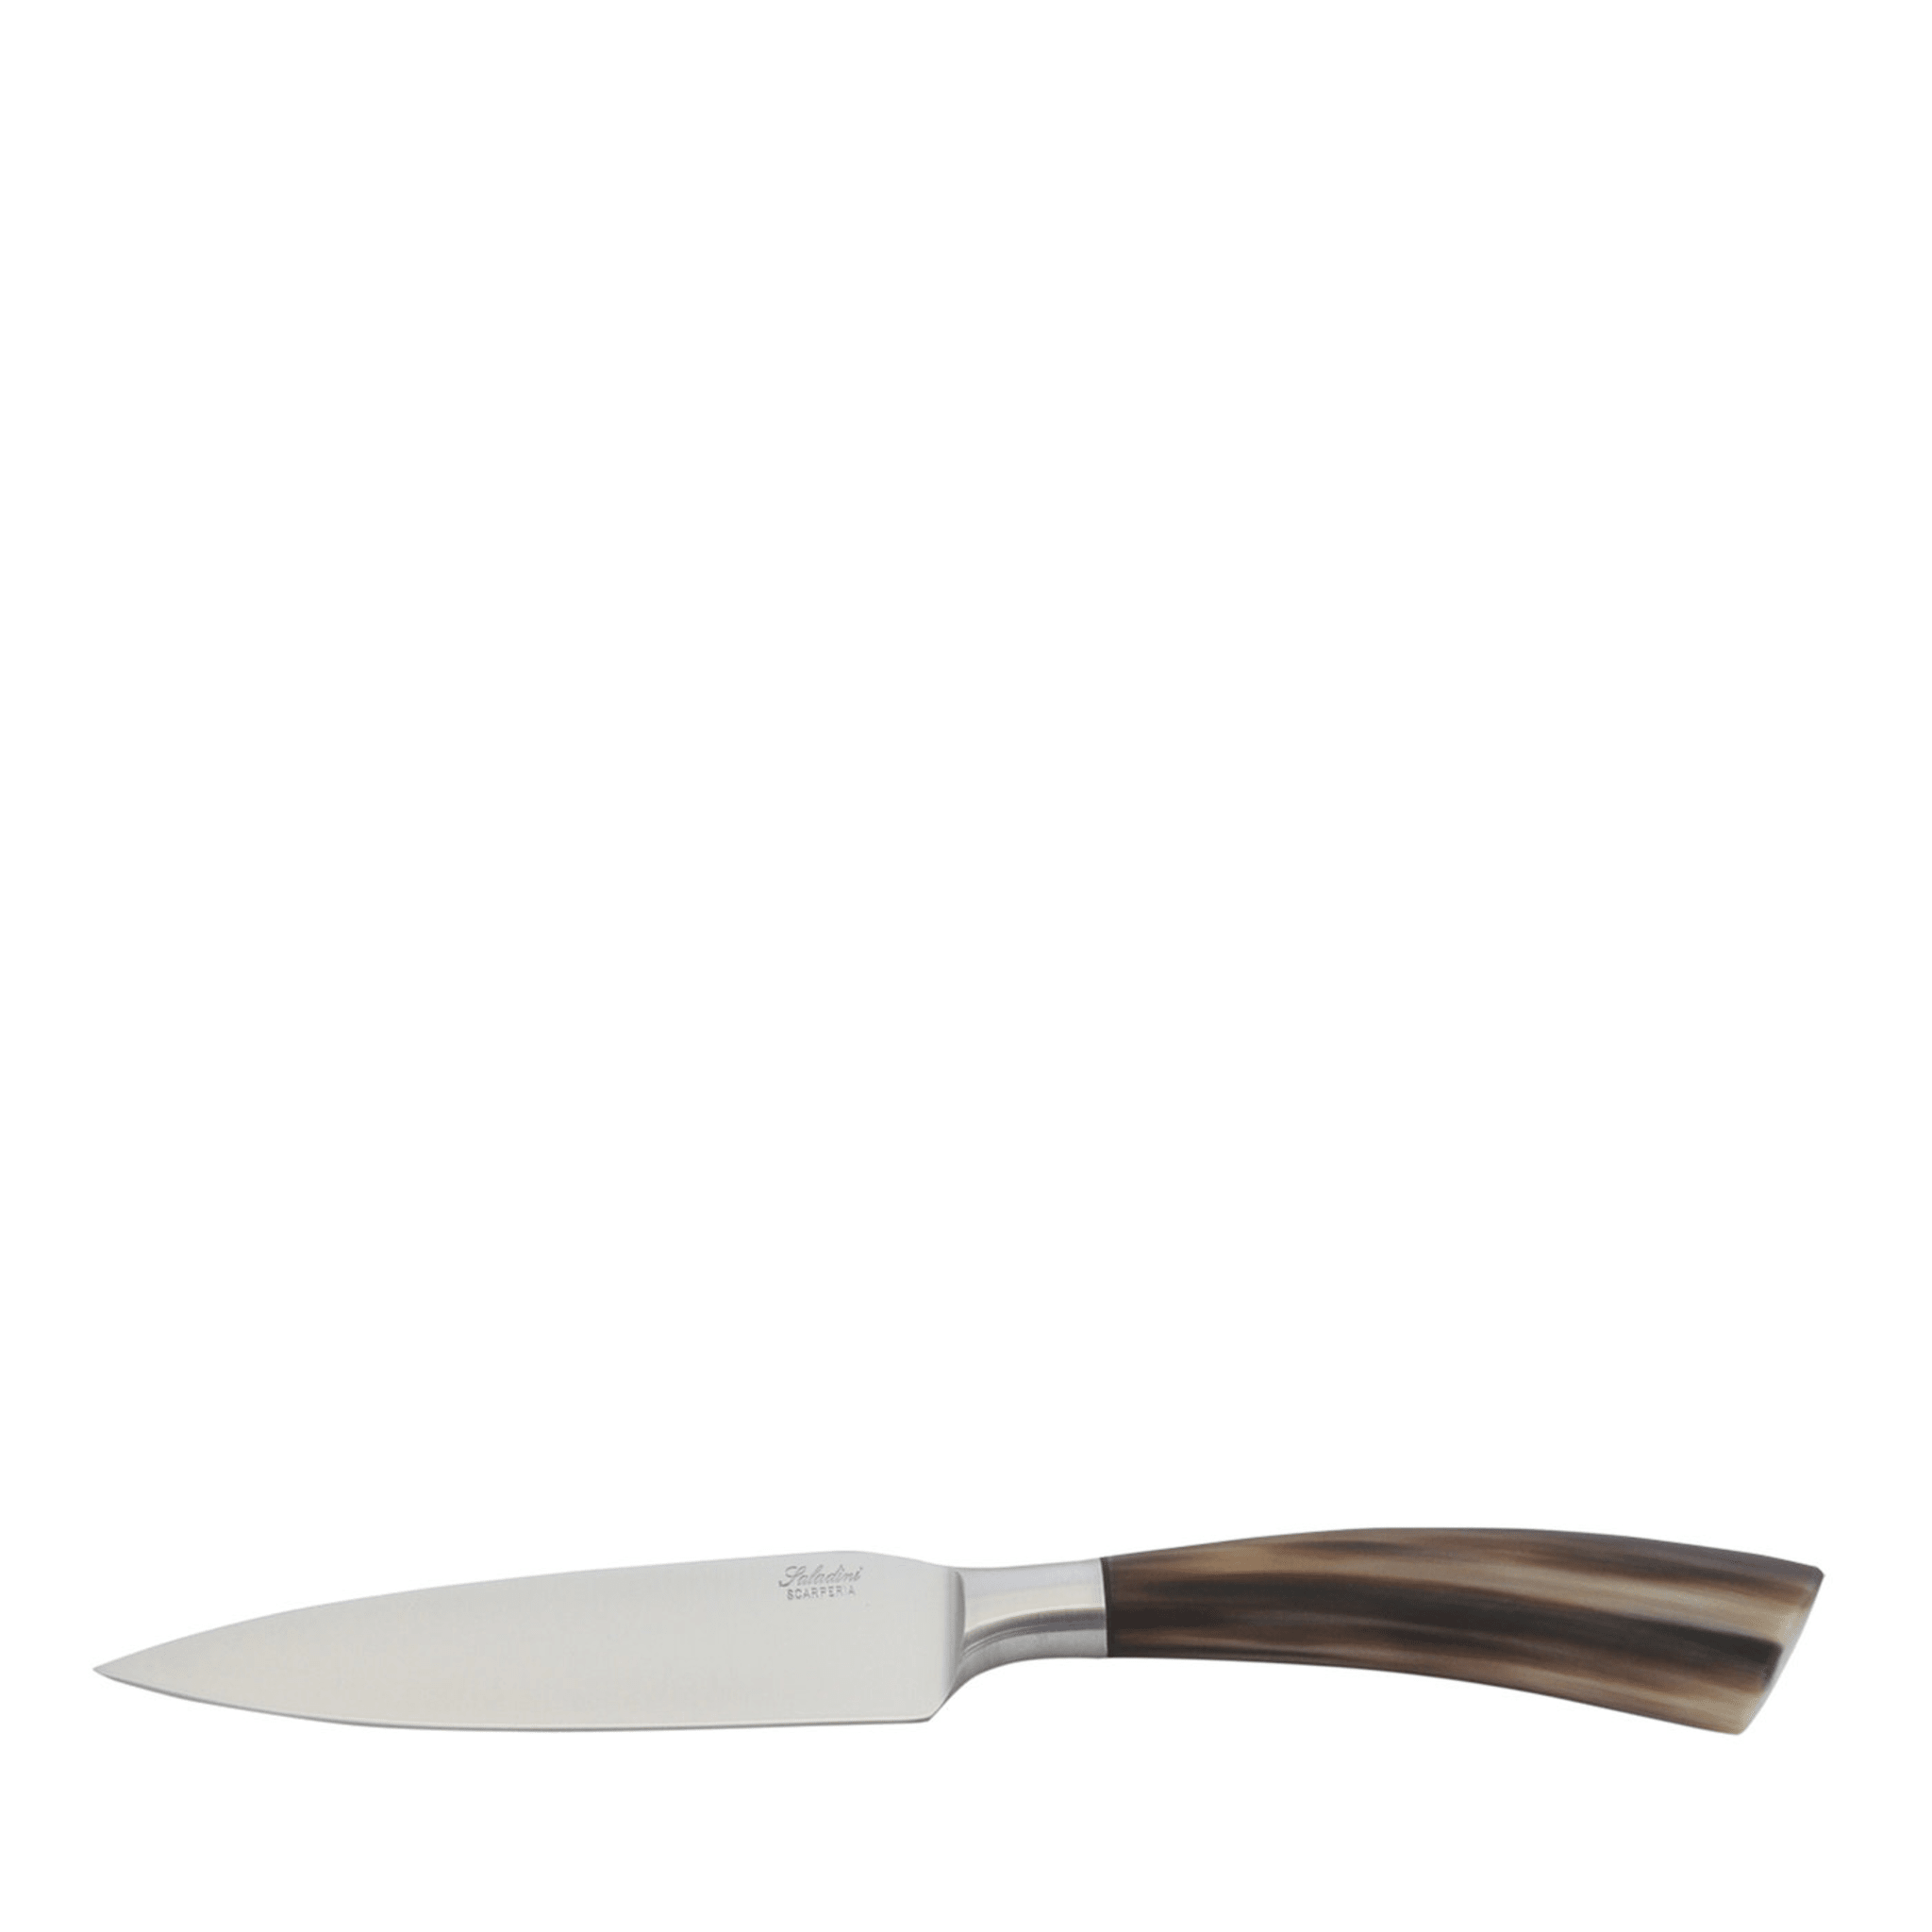 Six Rustic Steak Knives